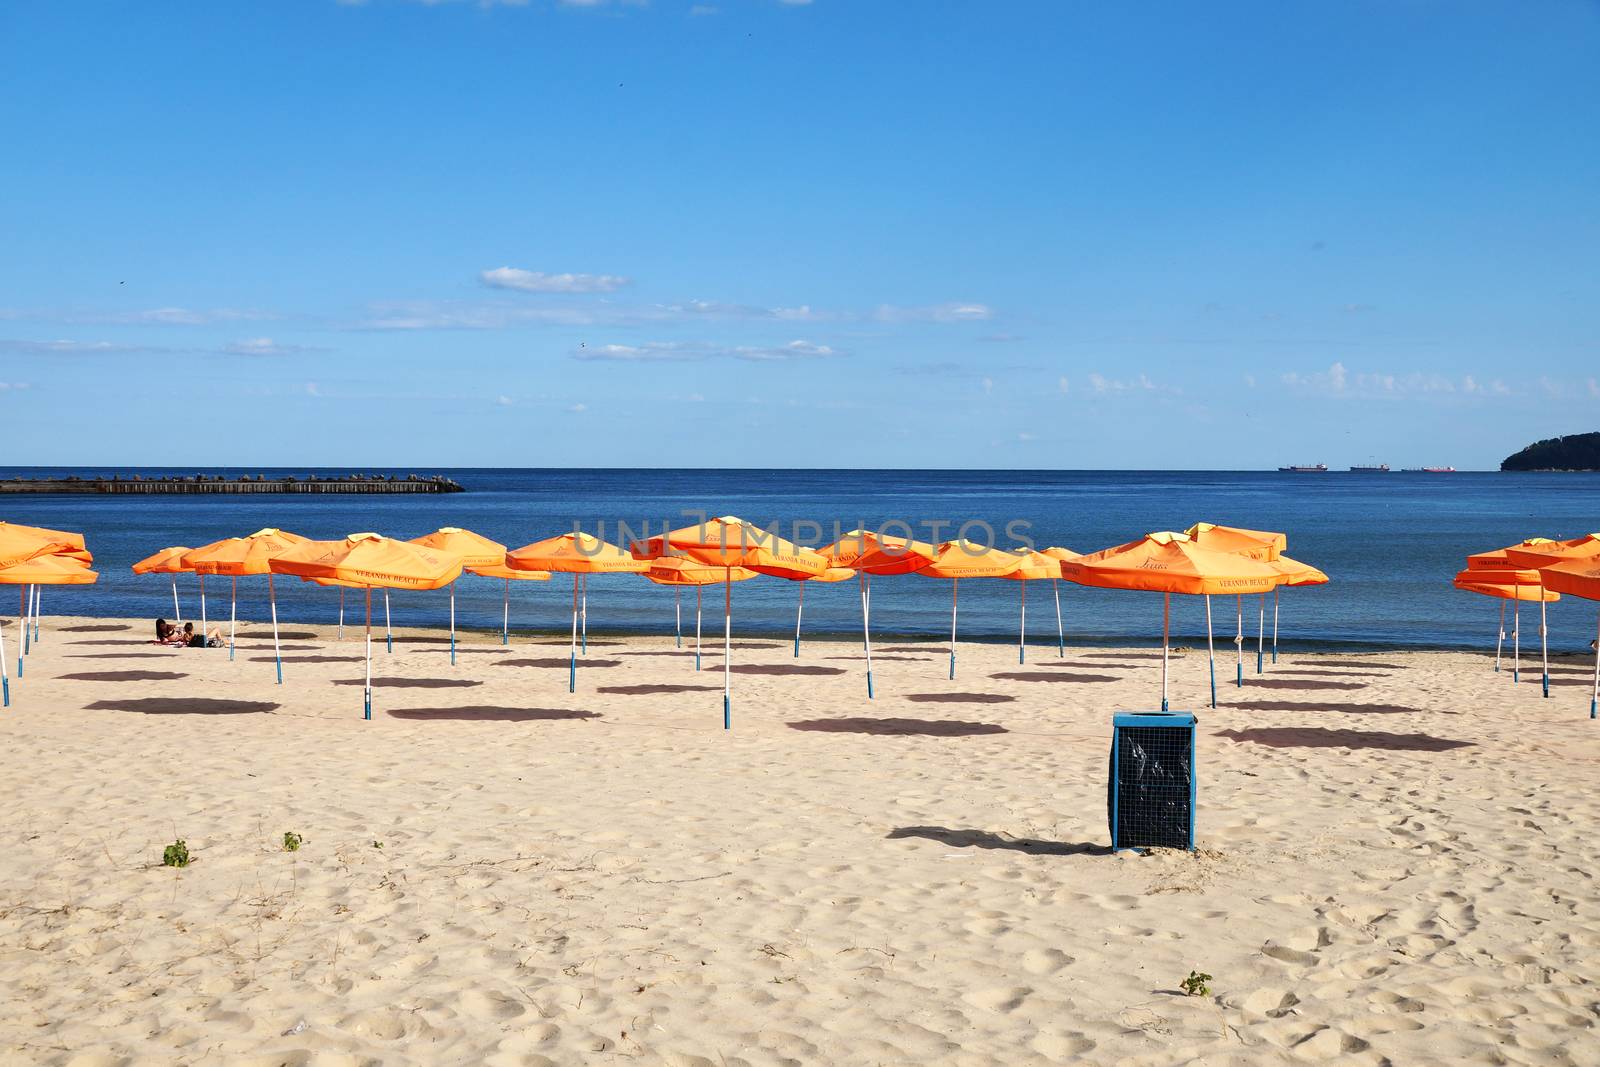 Varna, Bulgaria - July, 13, 2020: beach umbrellas on an empty beach by Annado